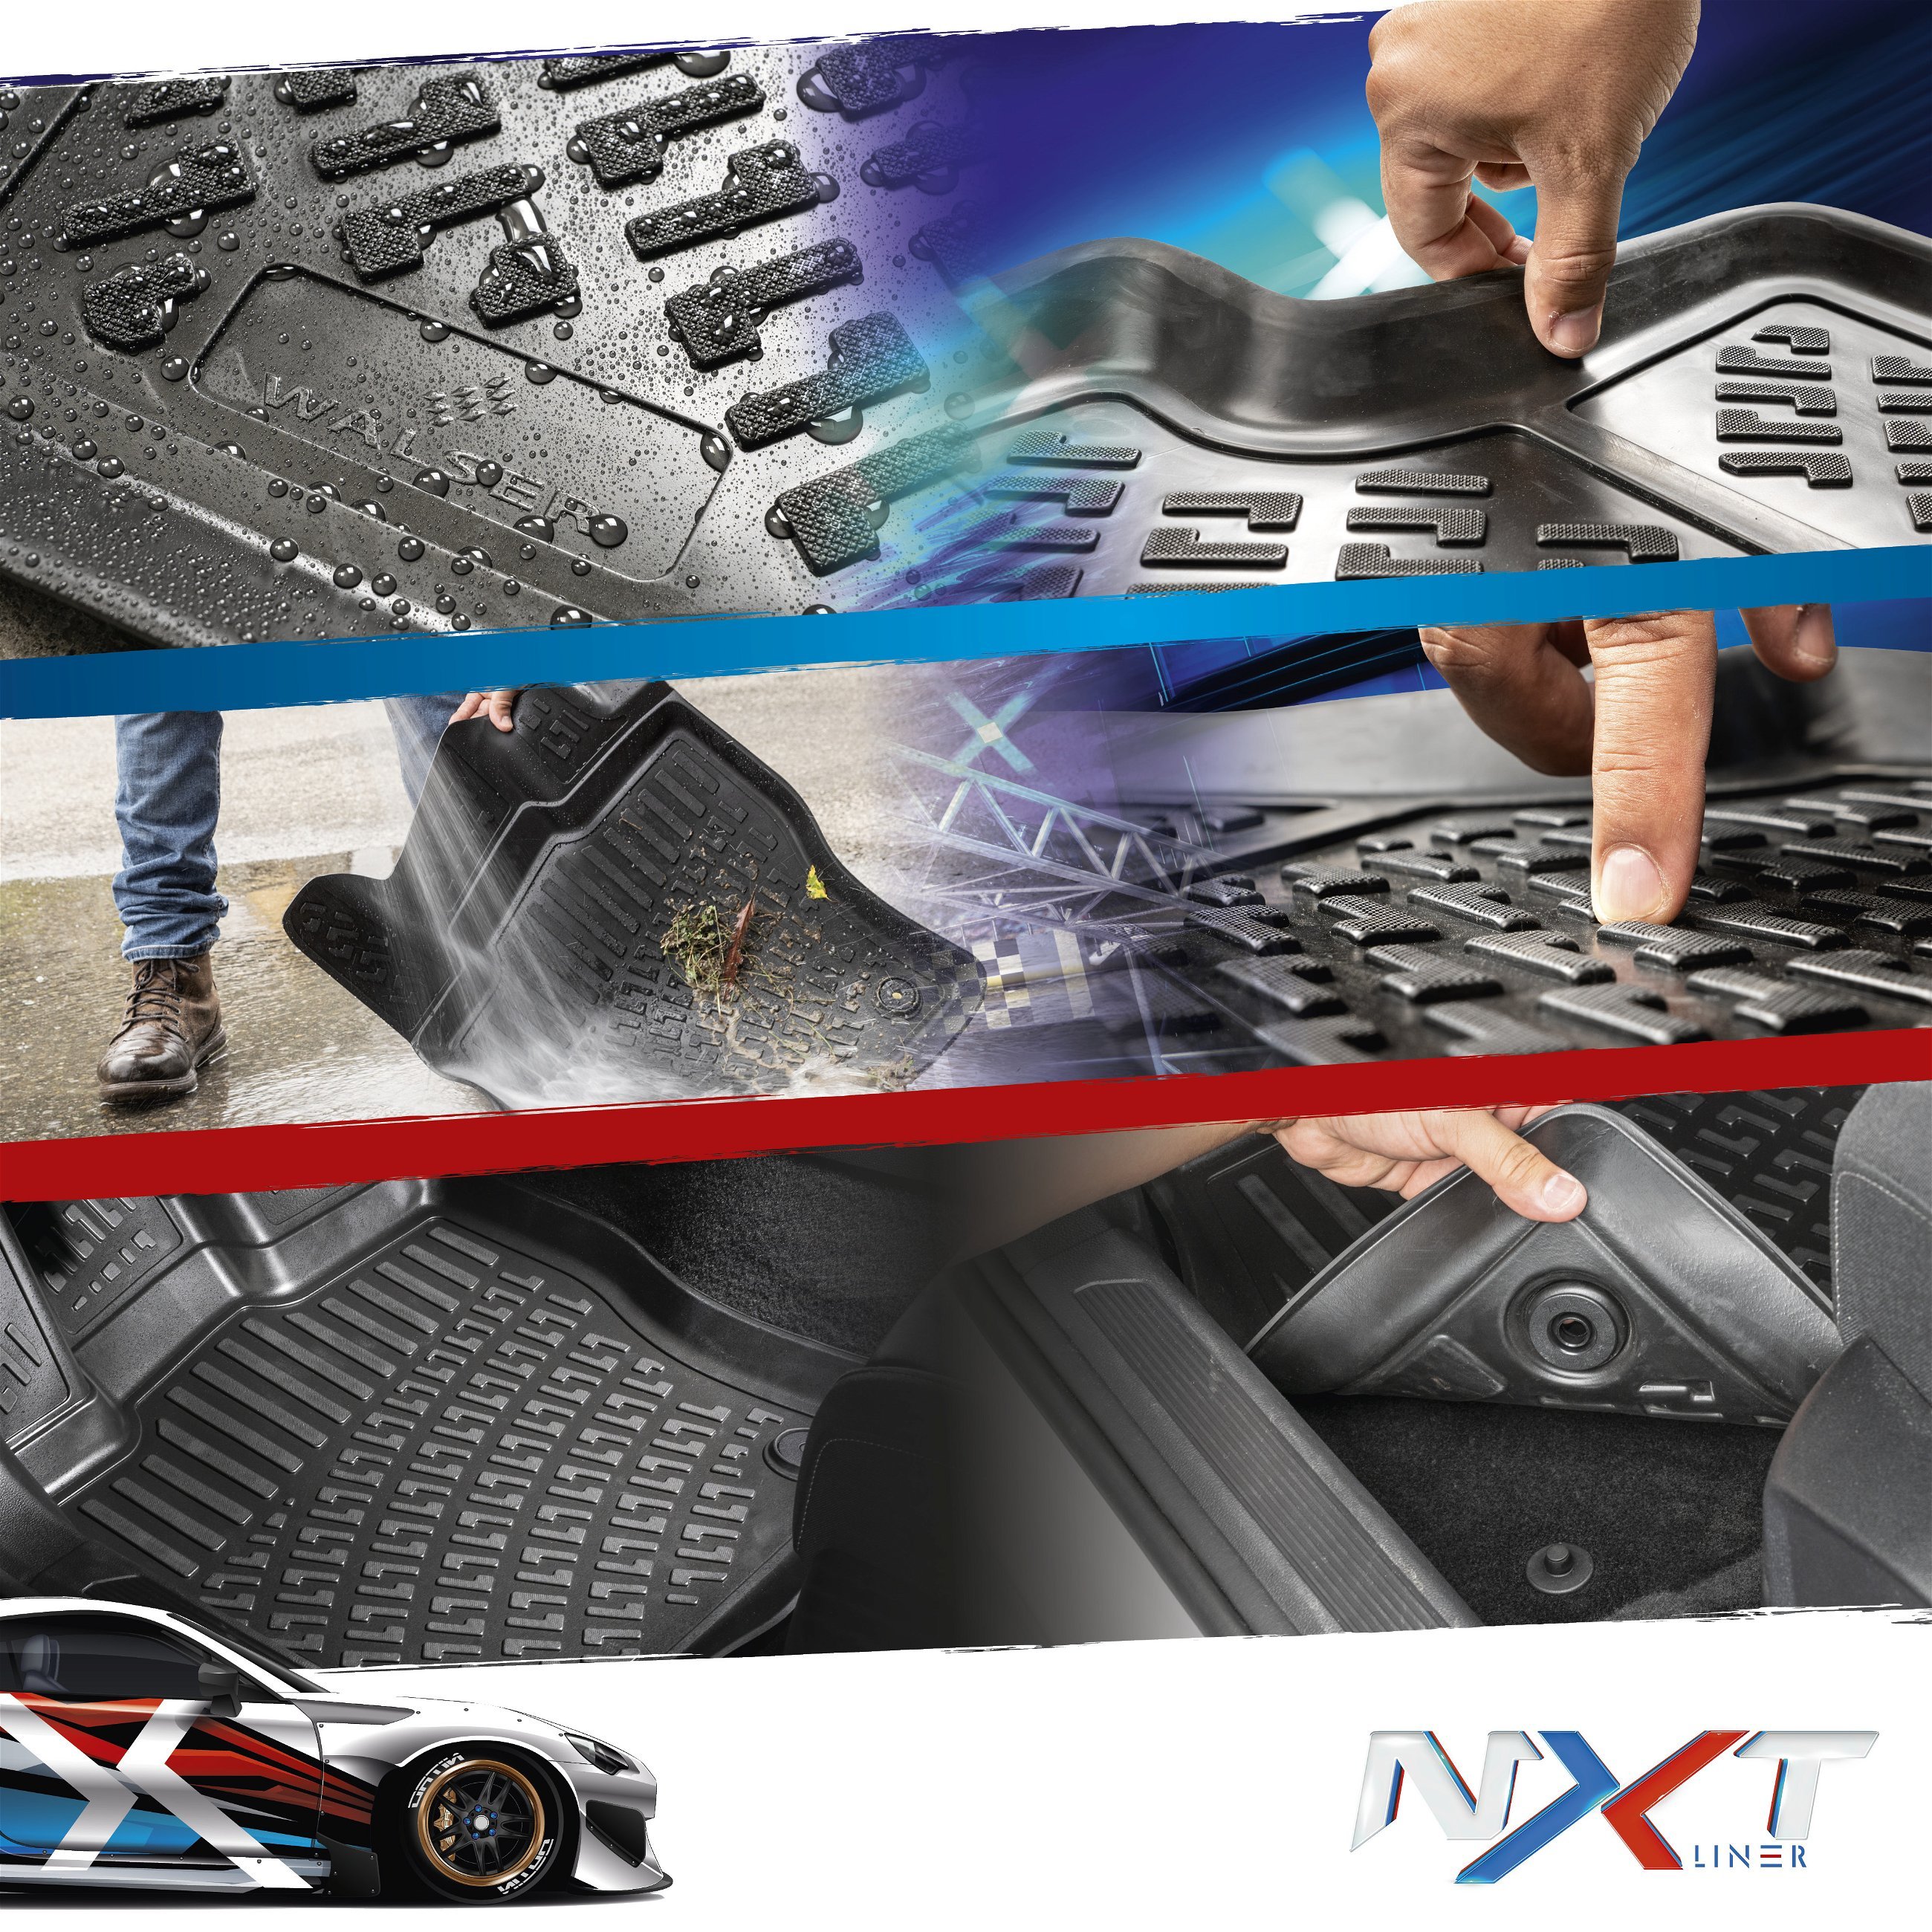 Rubberen Voetmatten NXT geschikt voor Audi A6 C7 11/2010-09/2018, A6 C7 Avant 05/2011-09/2018, A6 Allroad C7 01/2012-09/2018